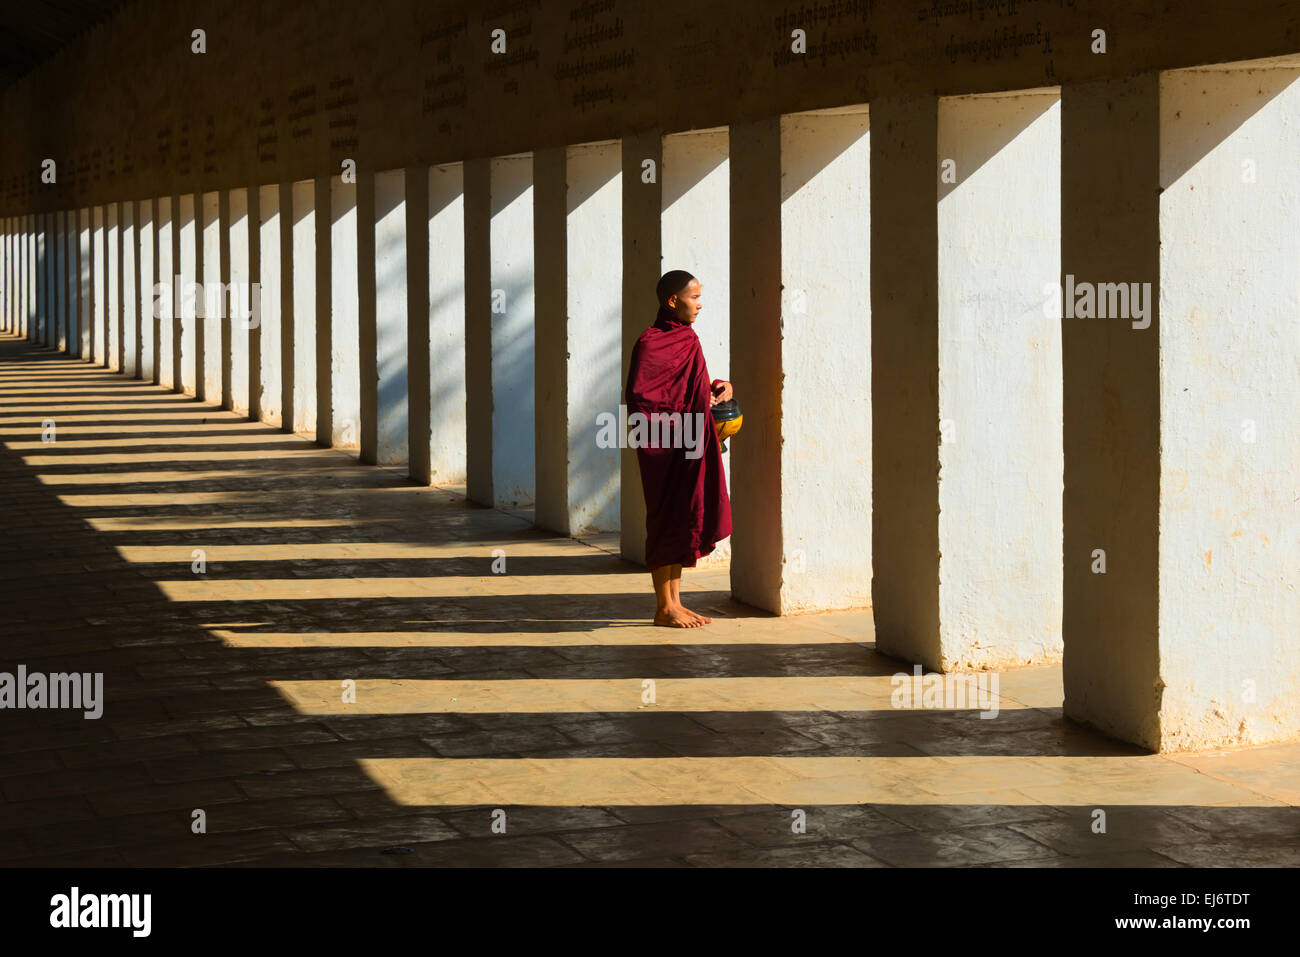 Monk in corridor with light streaming through, Bagan, Mandalay Region, Myanmar Stock Photo